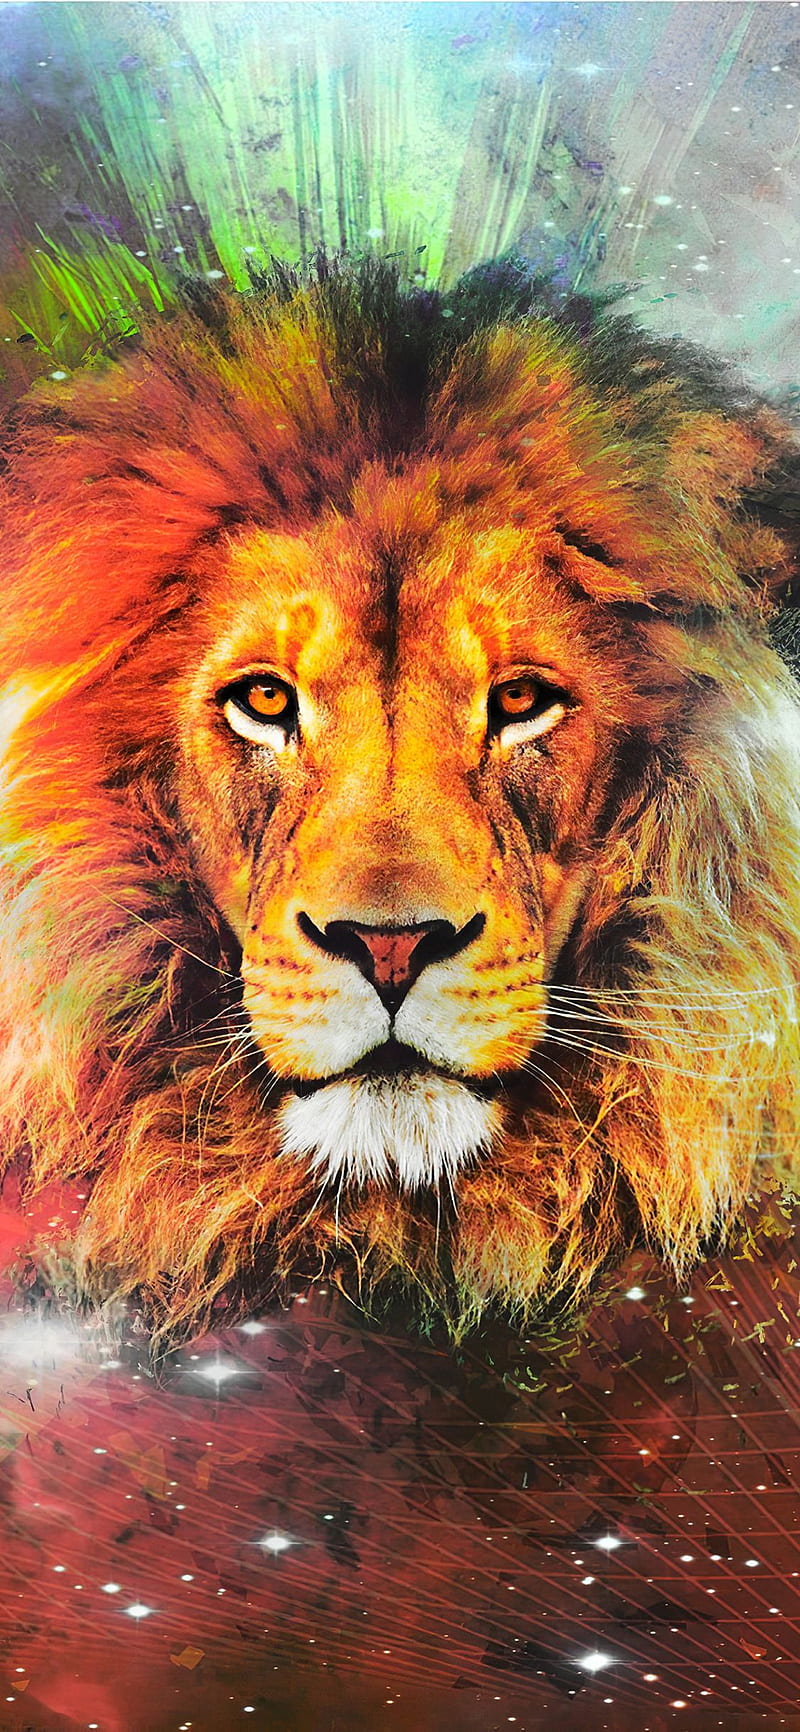 Lion Attitude - Lion Attitude updated their profile picture.